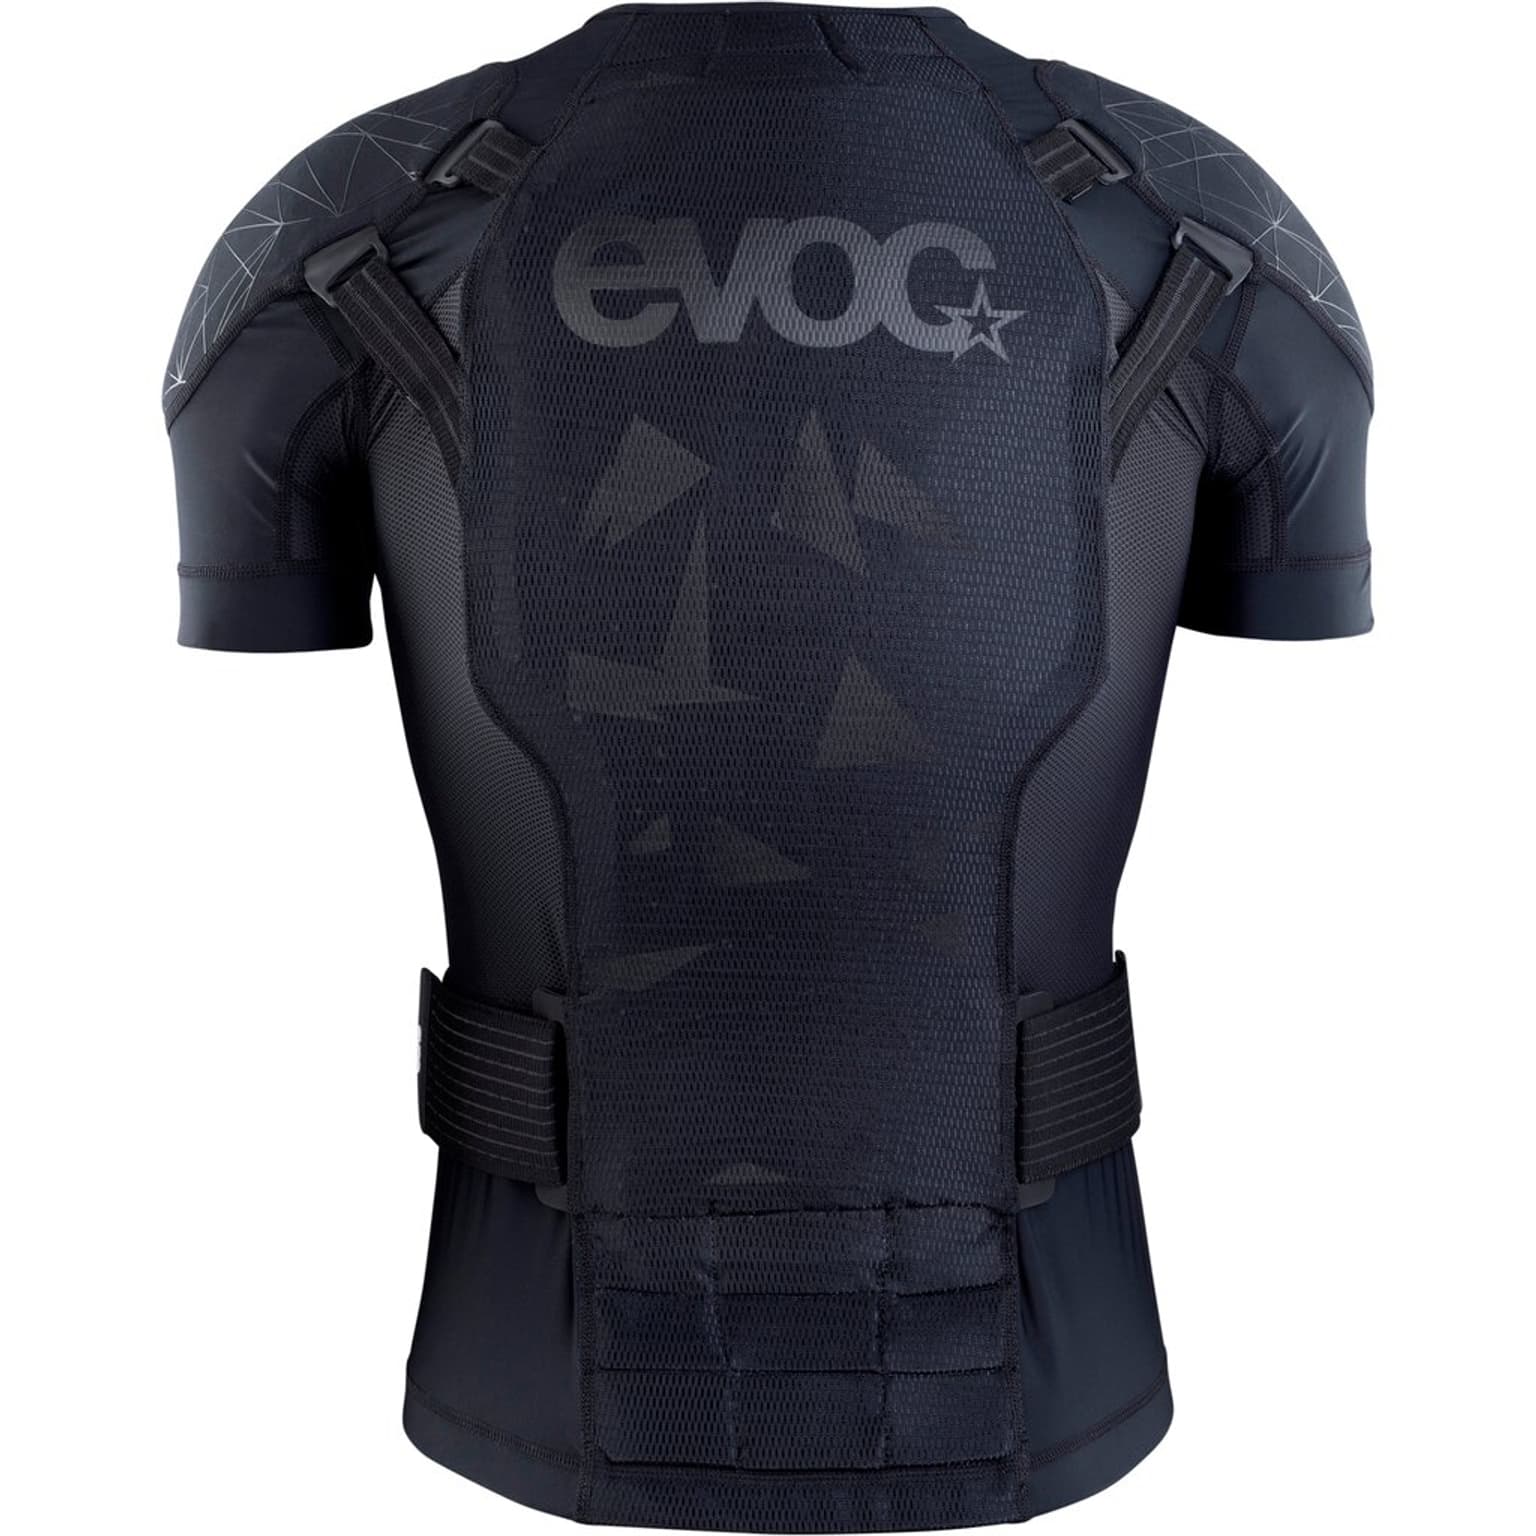 Evoc Evoc Protector Jacket Pro Protektoren schwarz 2